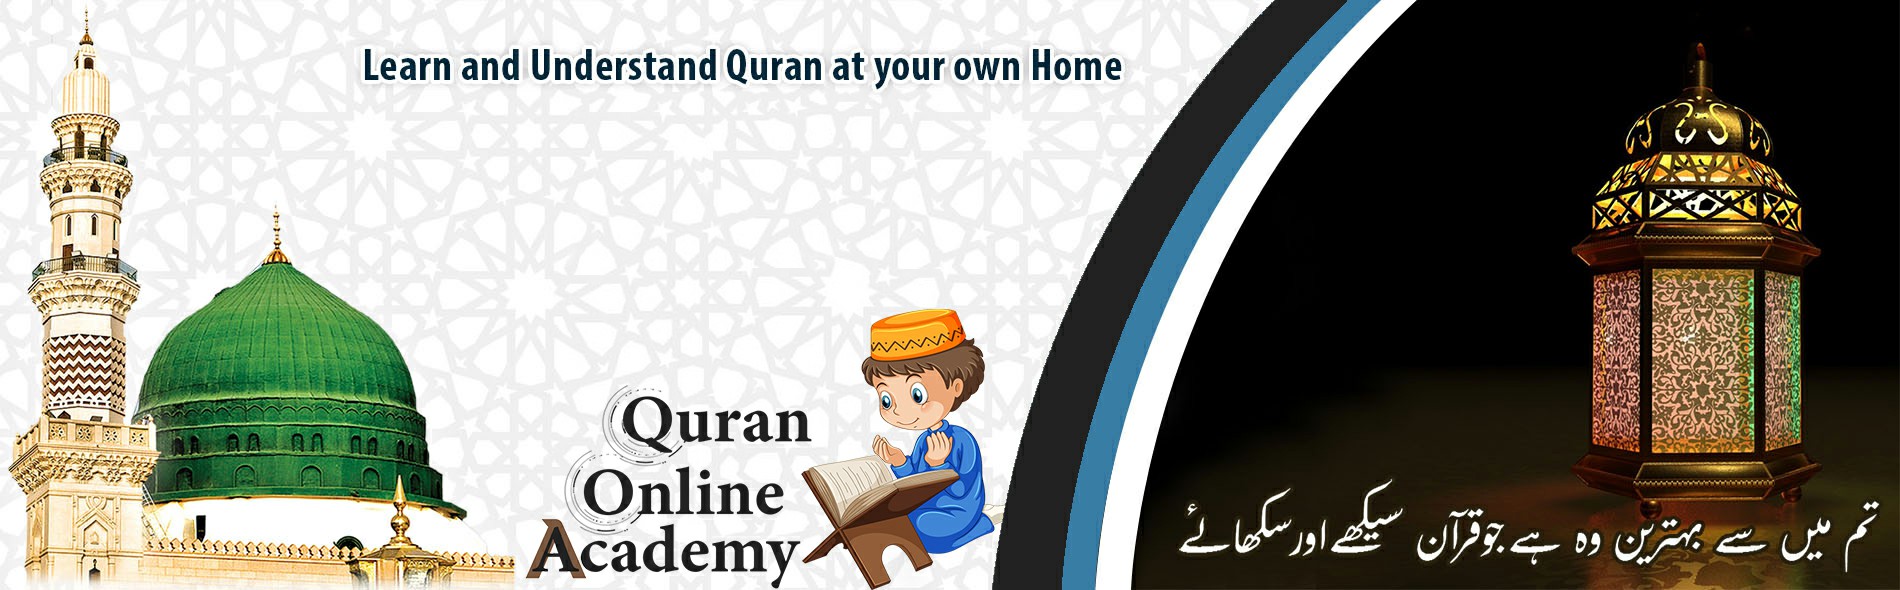 Quran Education Academy UK